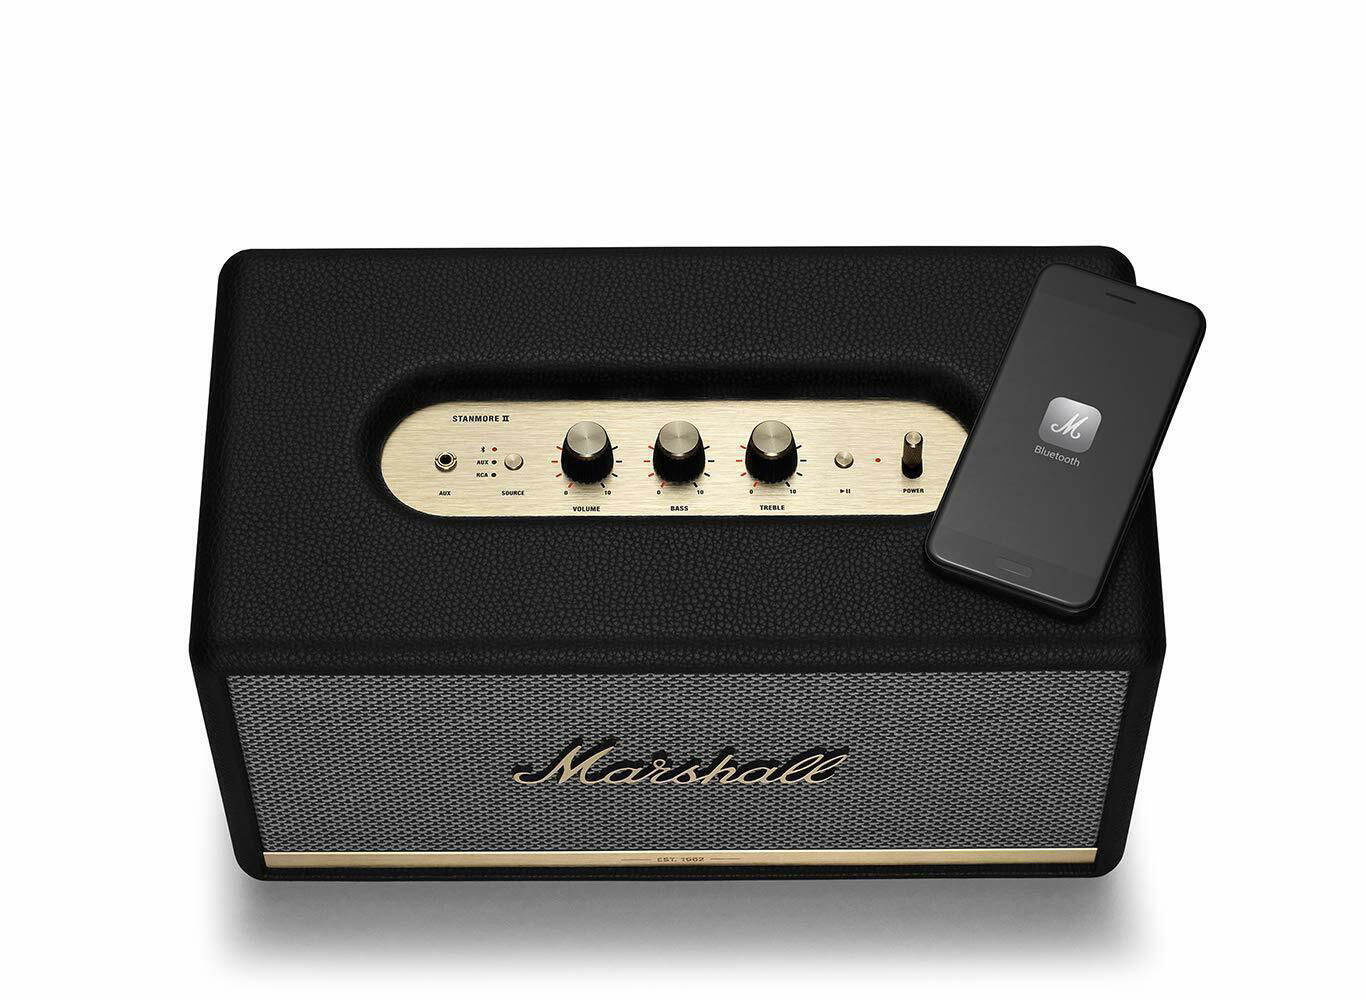 1:1 Marshall Stanmore II Wireless Bluetooth Speaker Voice Best Quality 3